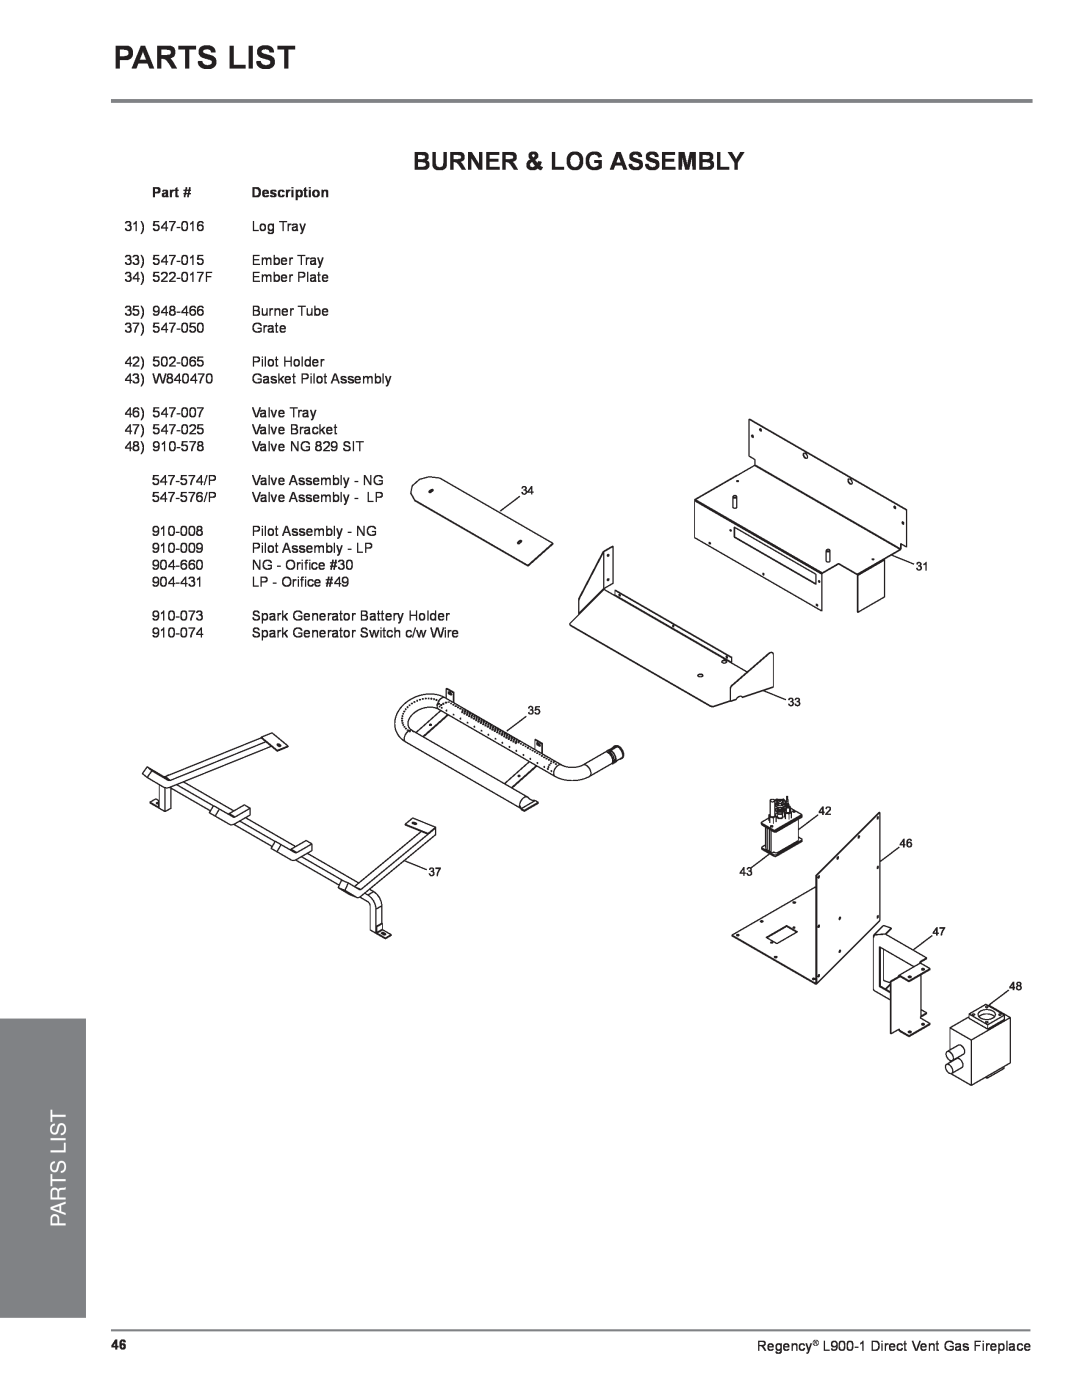 Regency L900-1 installation manual Parts List, Burner & Log Assembly, Part #, Description 